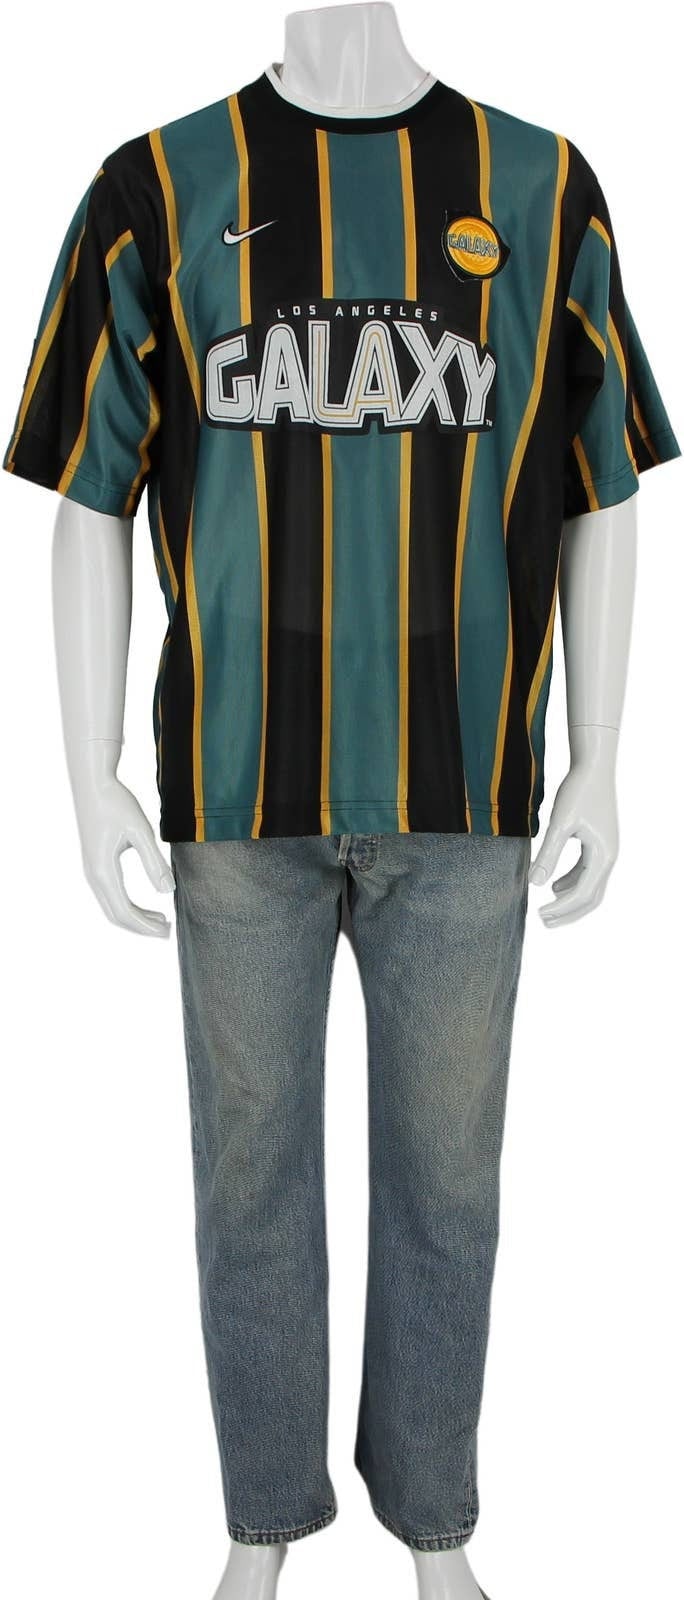 Classic Football Shirts - LA Galaxy Late 90s Away by Nike 🇺🇸 The